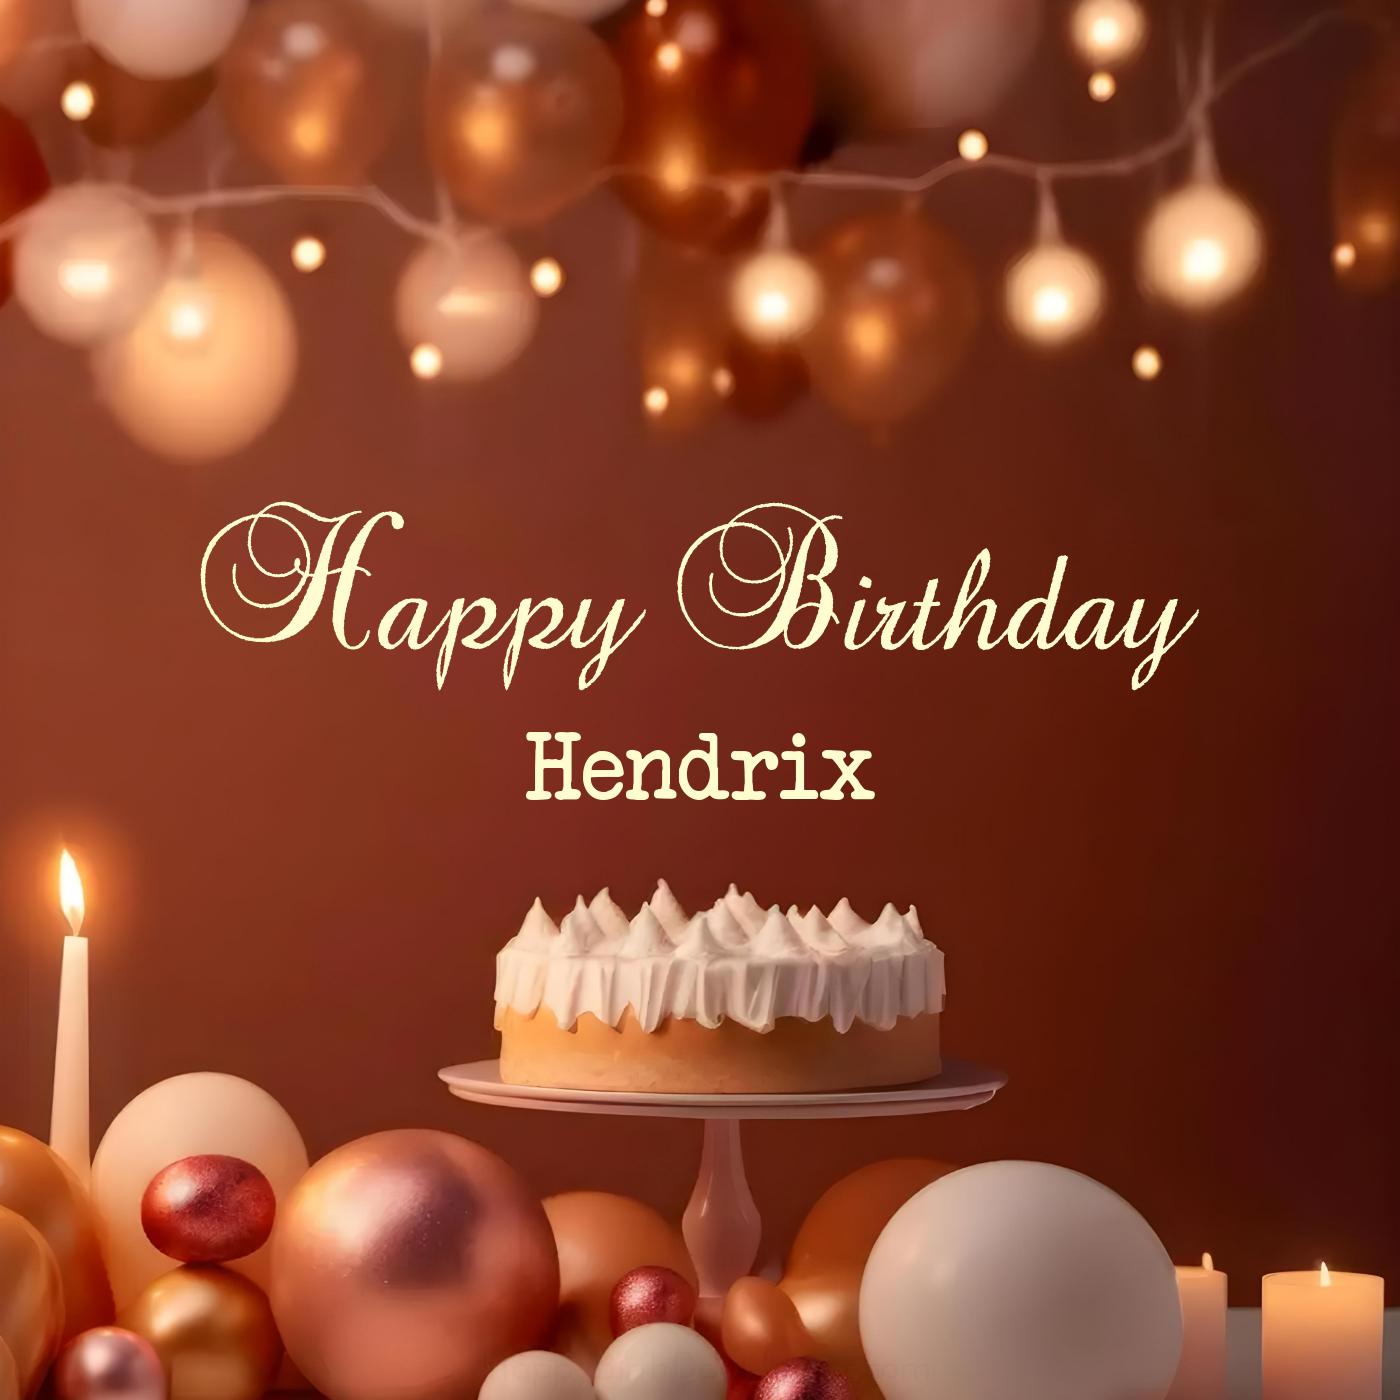 Happy Birthday Hendrix Cake Candles Card